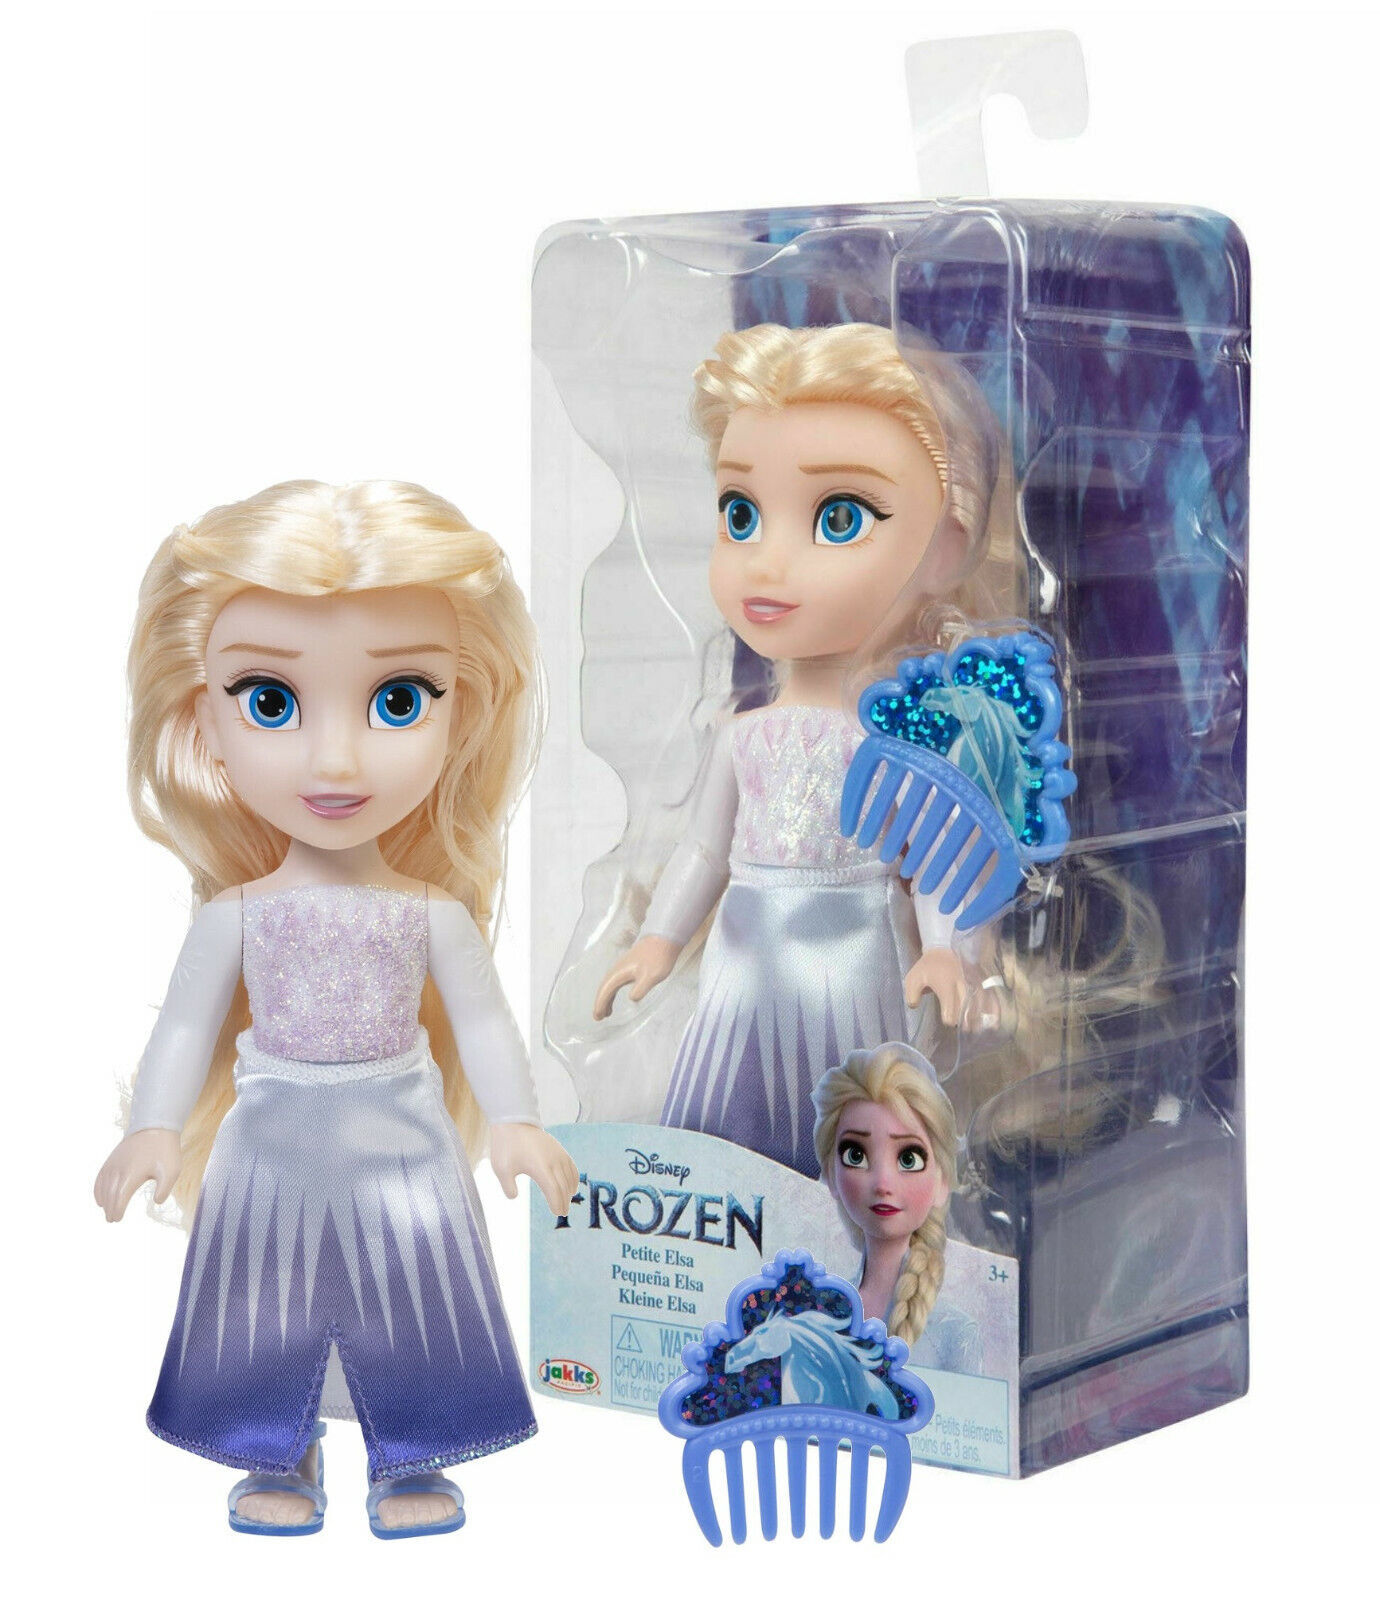 Disney Princess Petite Elsa Frozen 6" Doll Jakks Pacific New in Box - $11.88